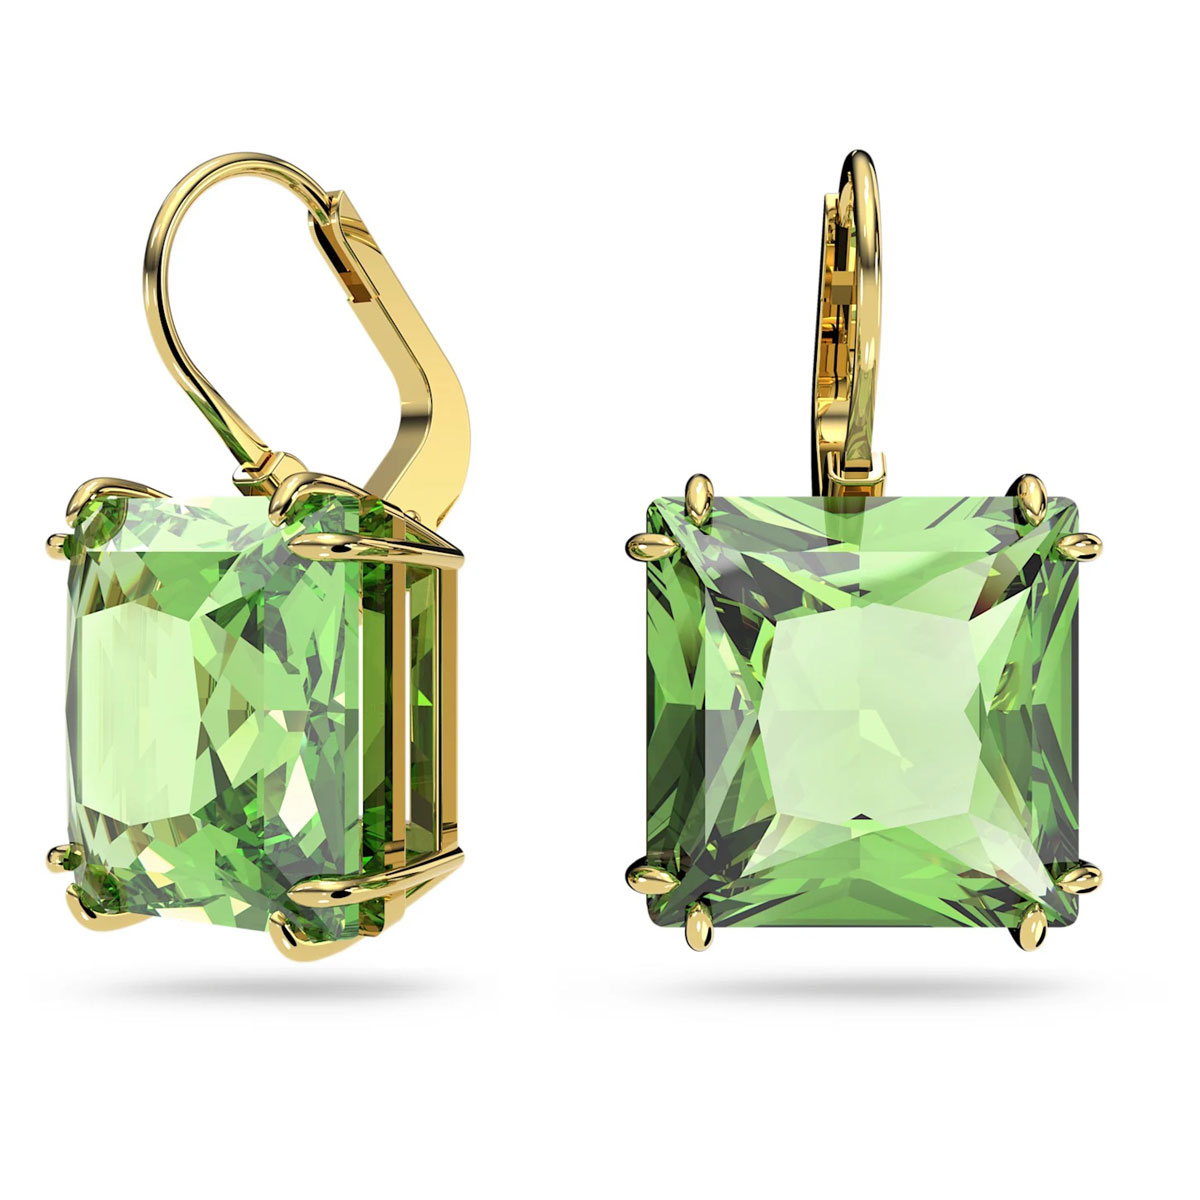 Swarovski Millenia Earrings, Square Cut Crystal, Green, Gold-Tone Plated